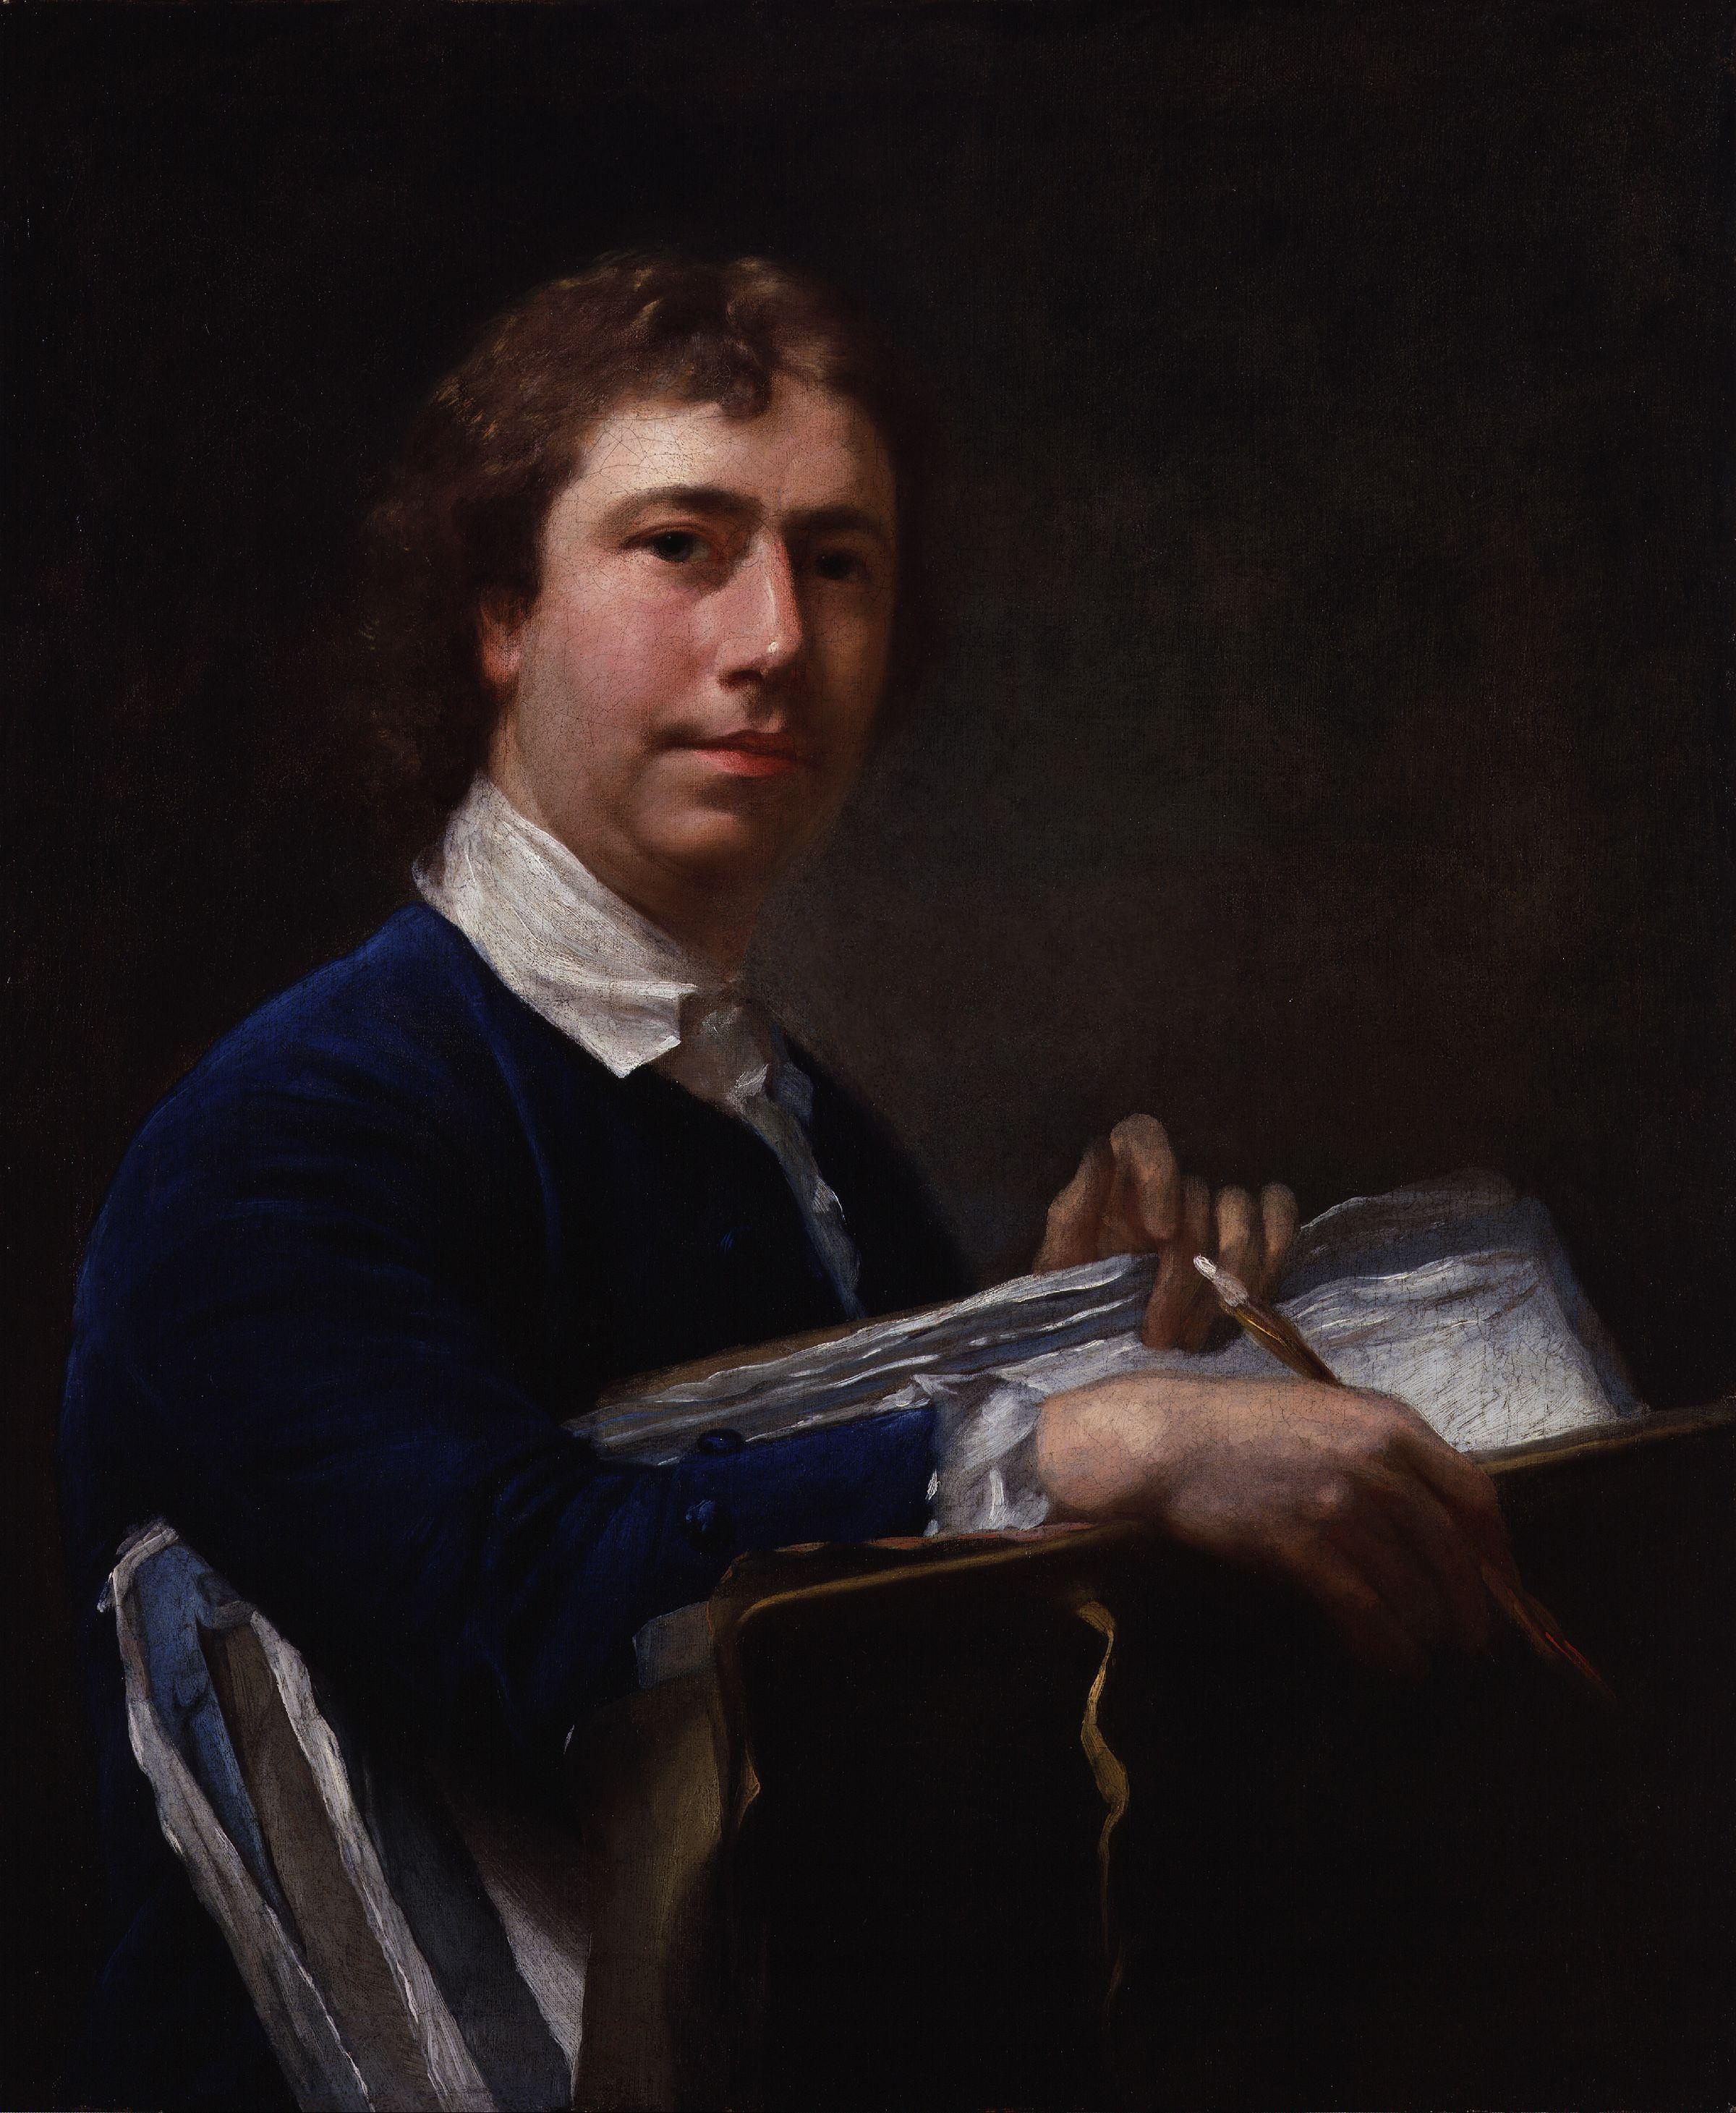 Nathaniel Hone, portrait painter, is born in Dublin